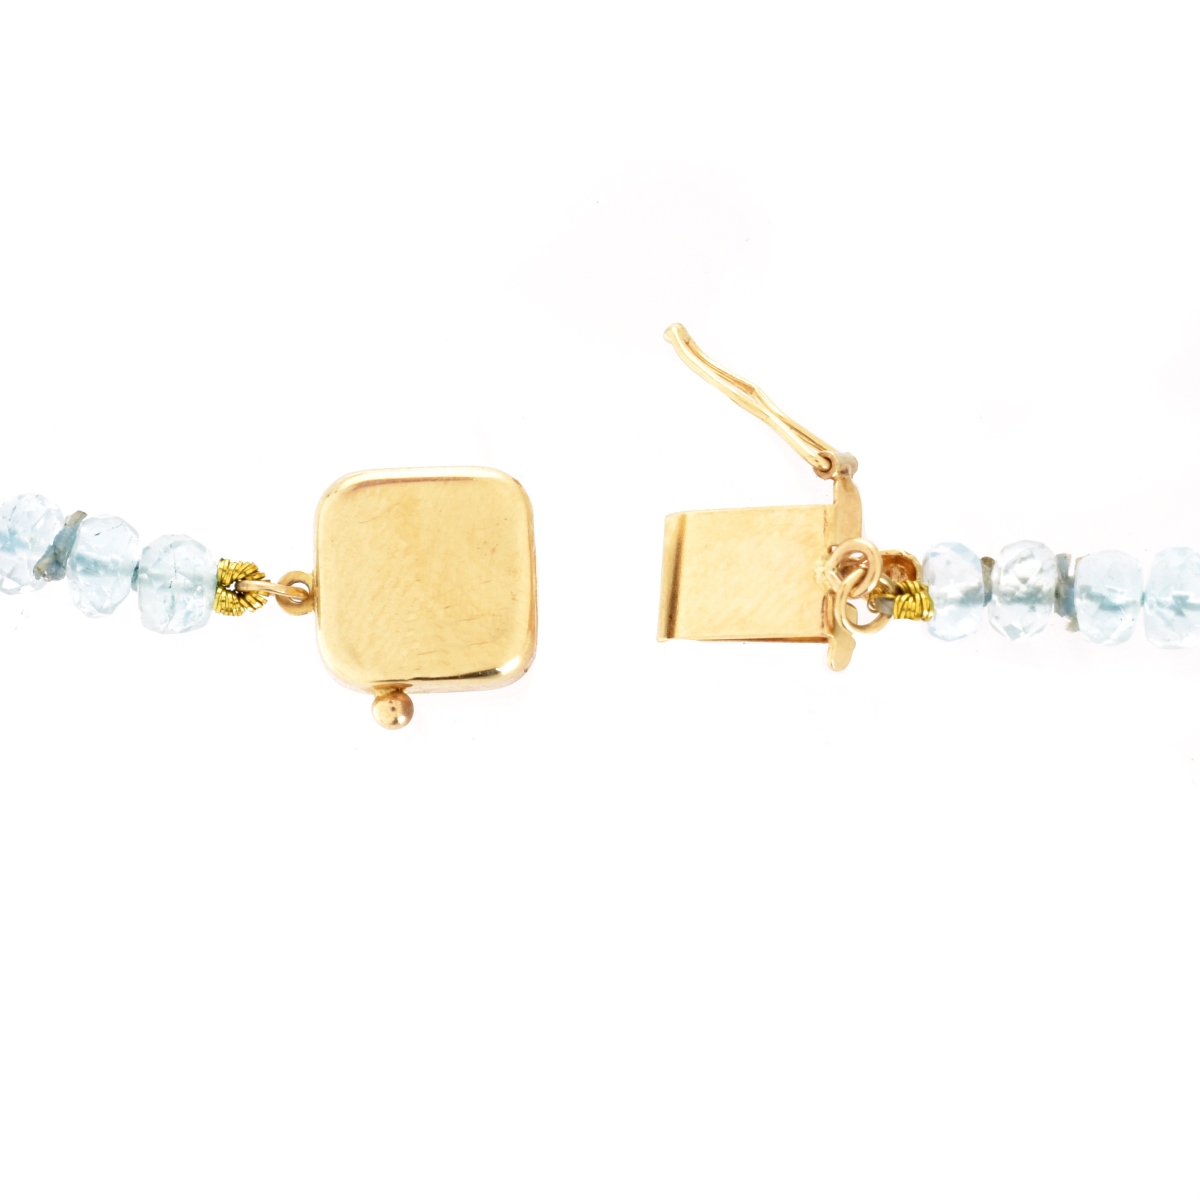 Aquamarine, Diamond and 14K Pendant Necklace